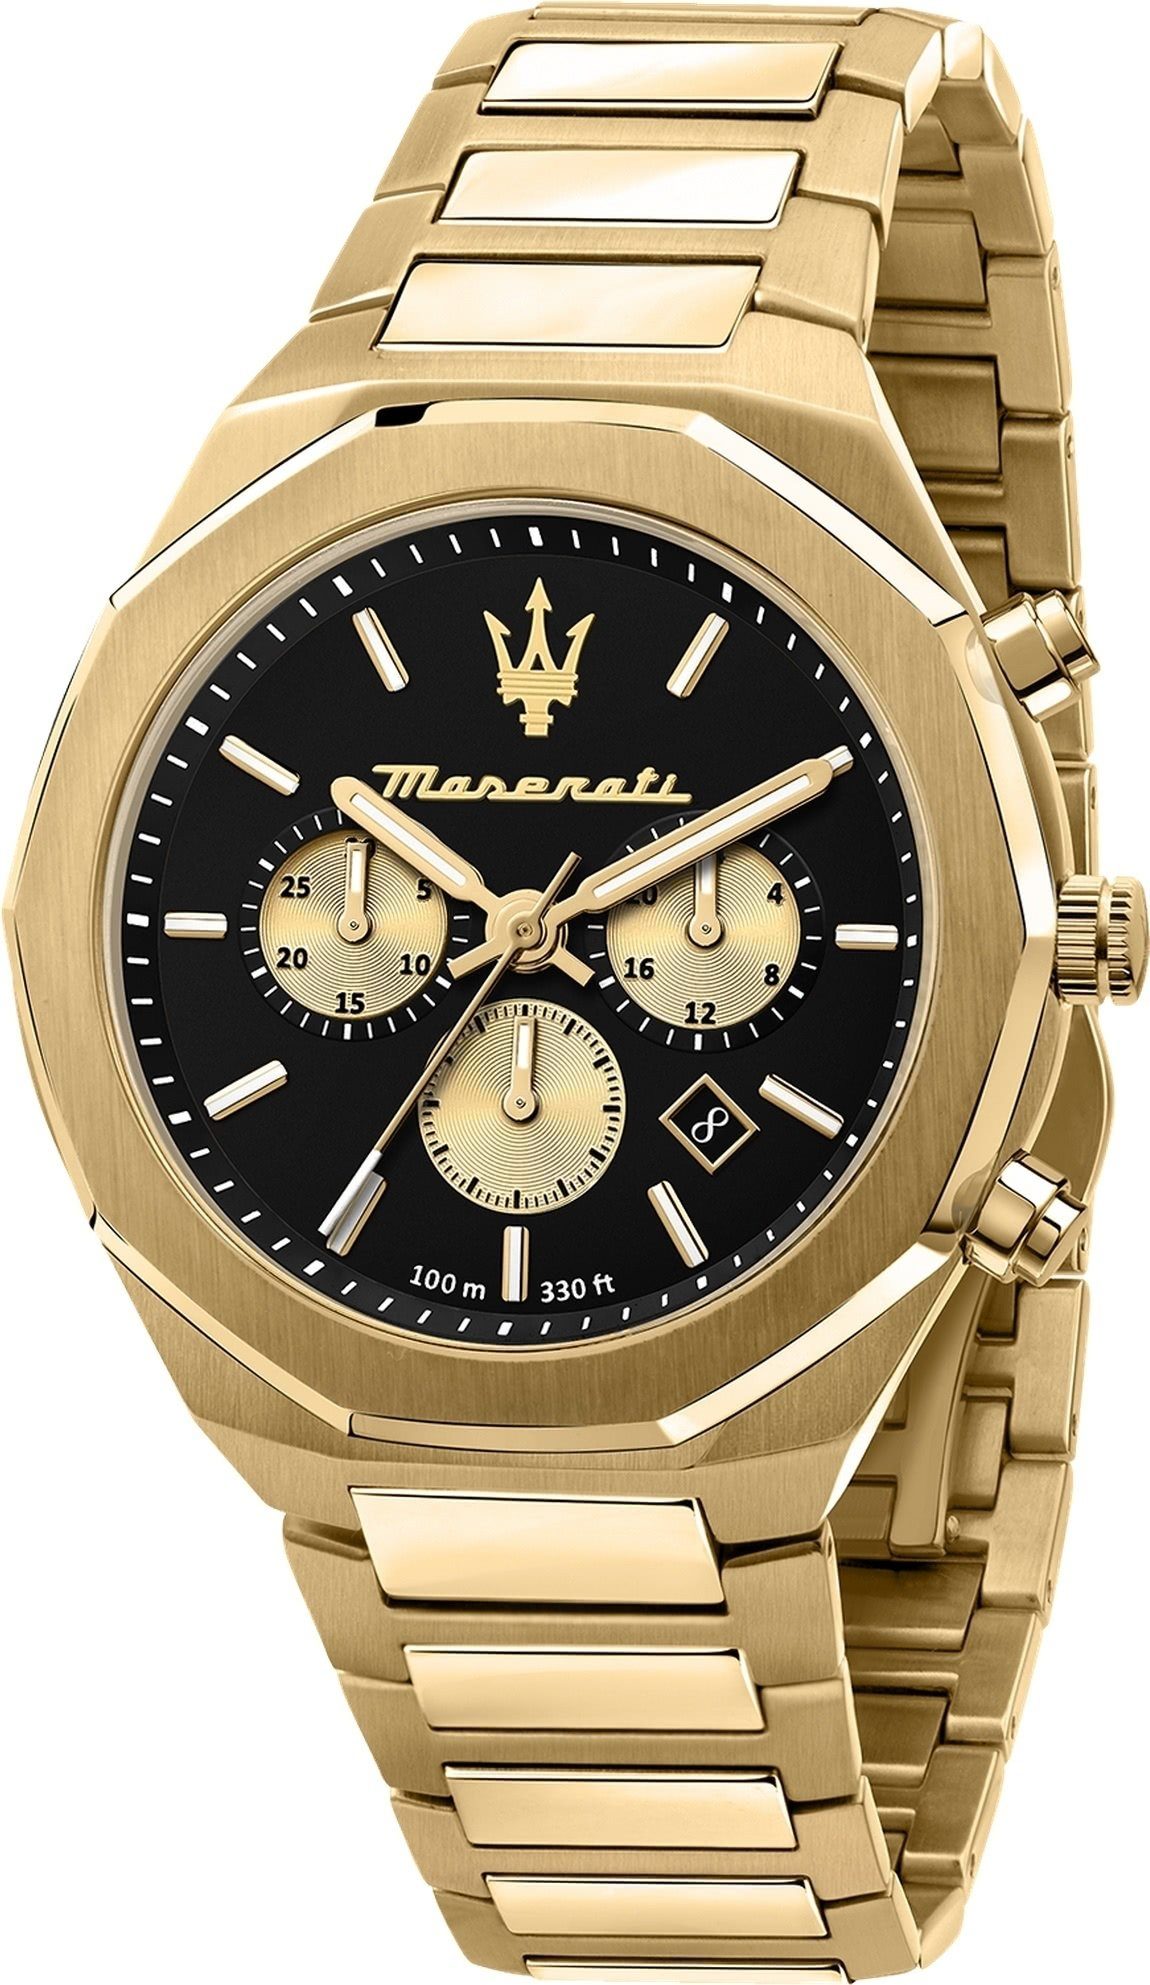 rund, gold Chronograph 45mm) Made-In Edelstahlarmband, Maserati (ca. Herren groß MASERATI Herrenuhr Uhr Chronograph, Italy